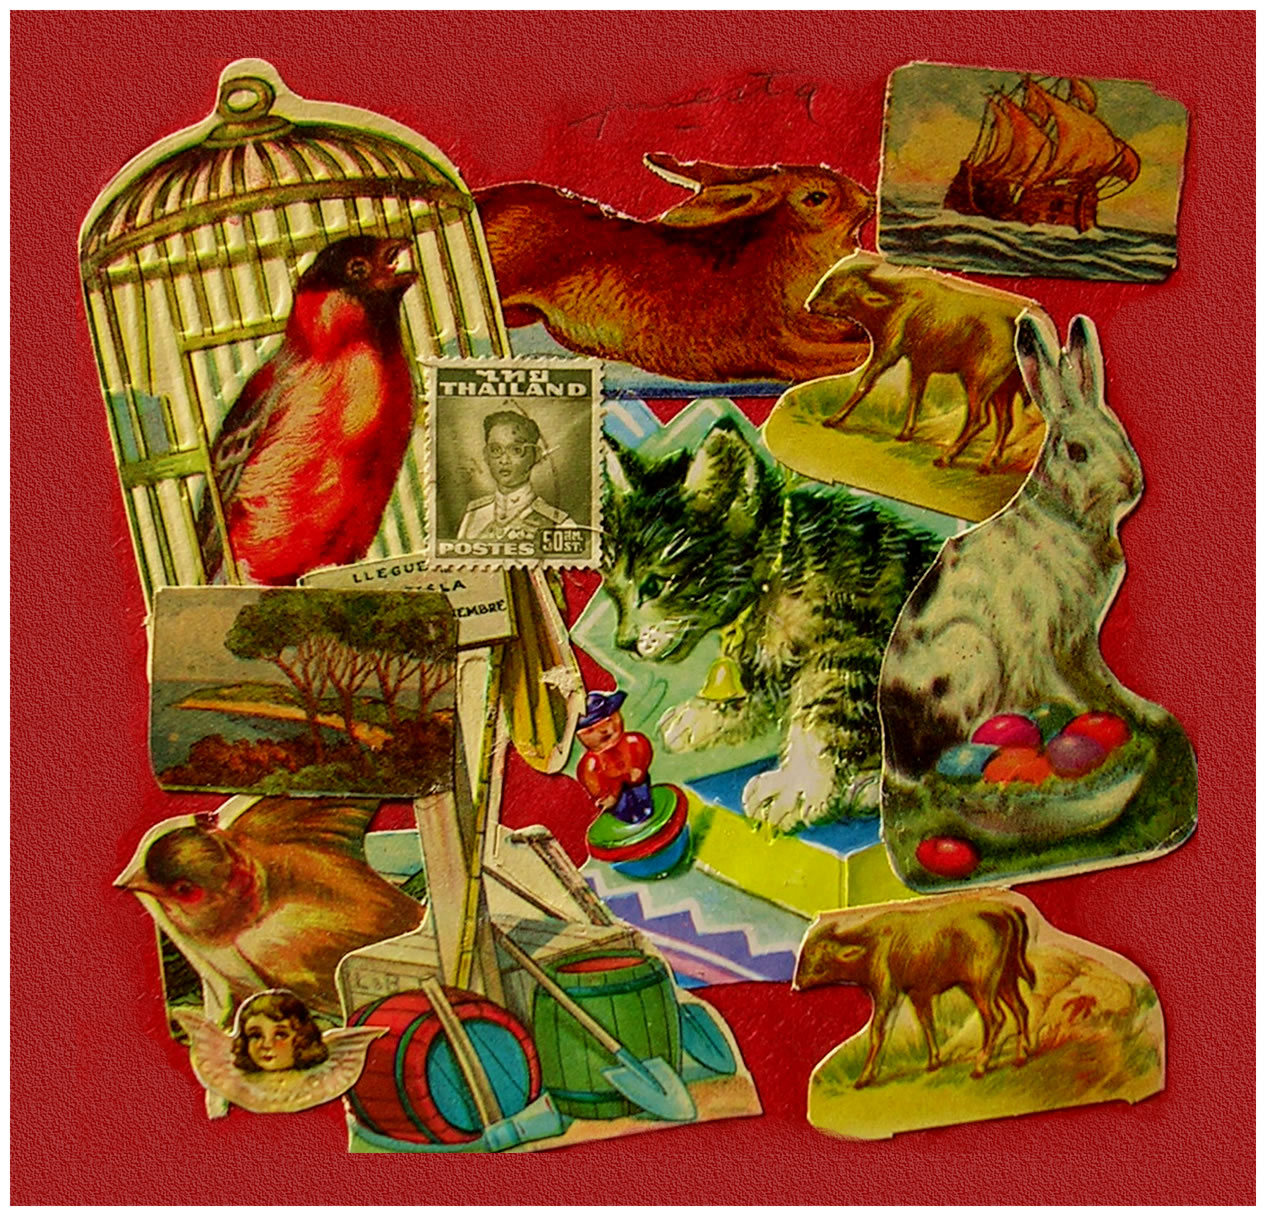 Animales y la Jaula, papel collage, 15 cm x 15 cm, 1999